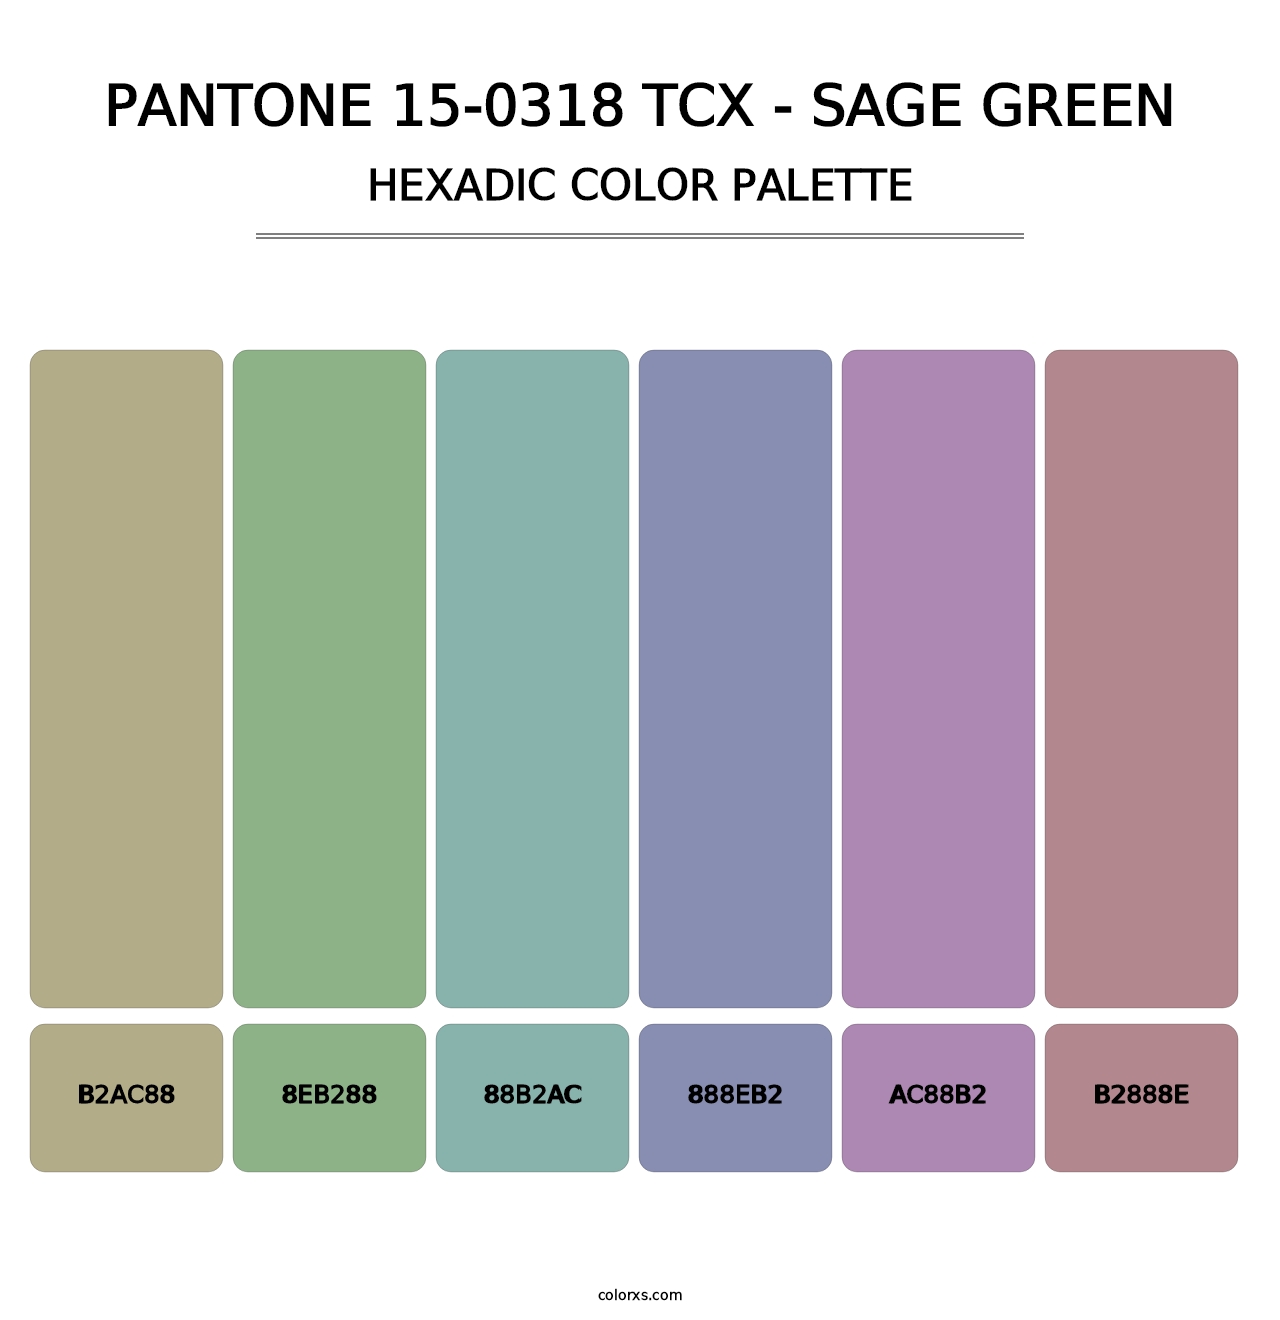 PANTONE 15-0318 TCX - Sage Green - Hexadic Color Palette